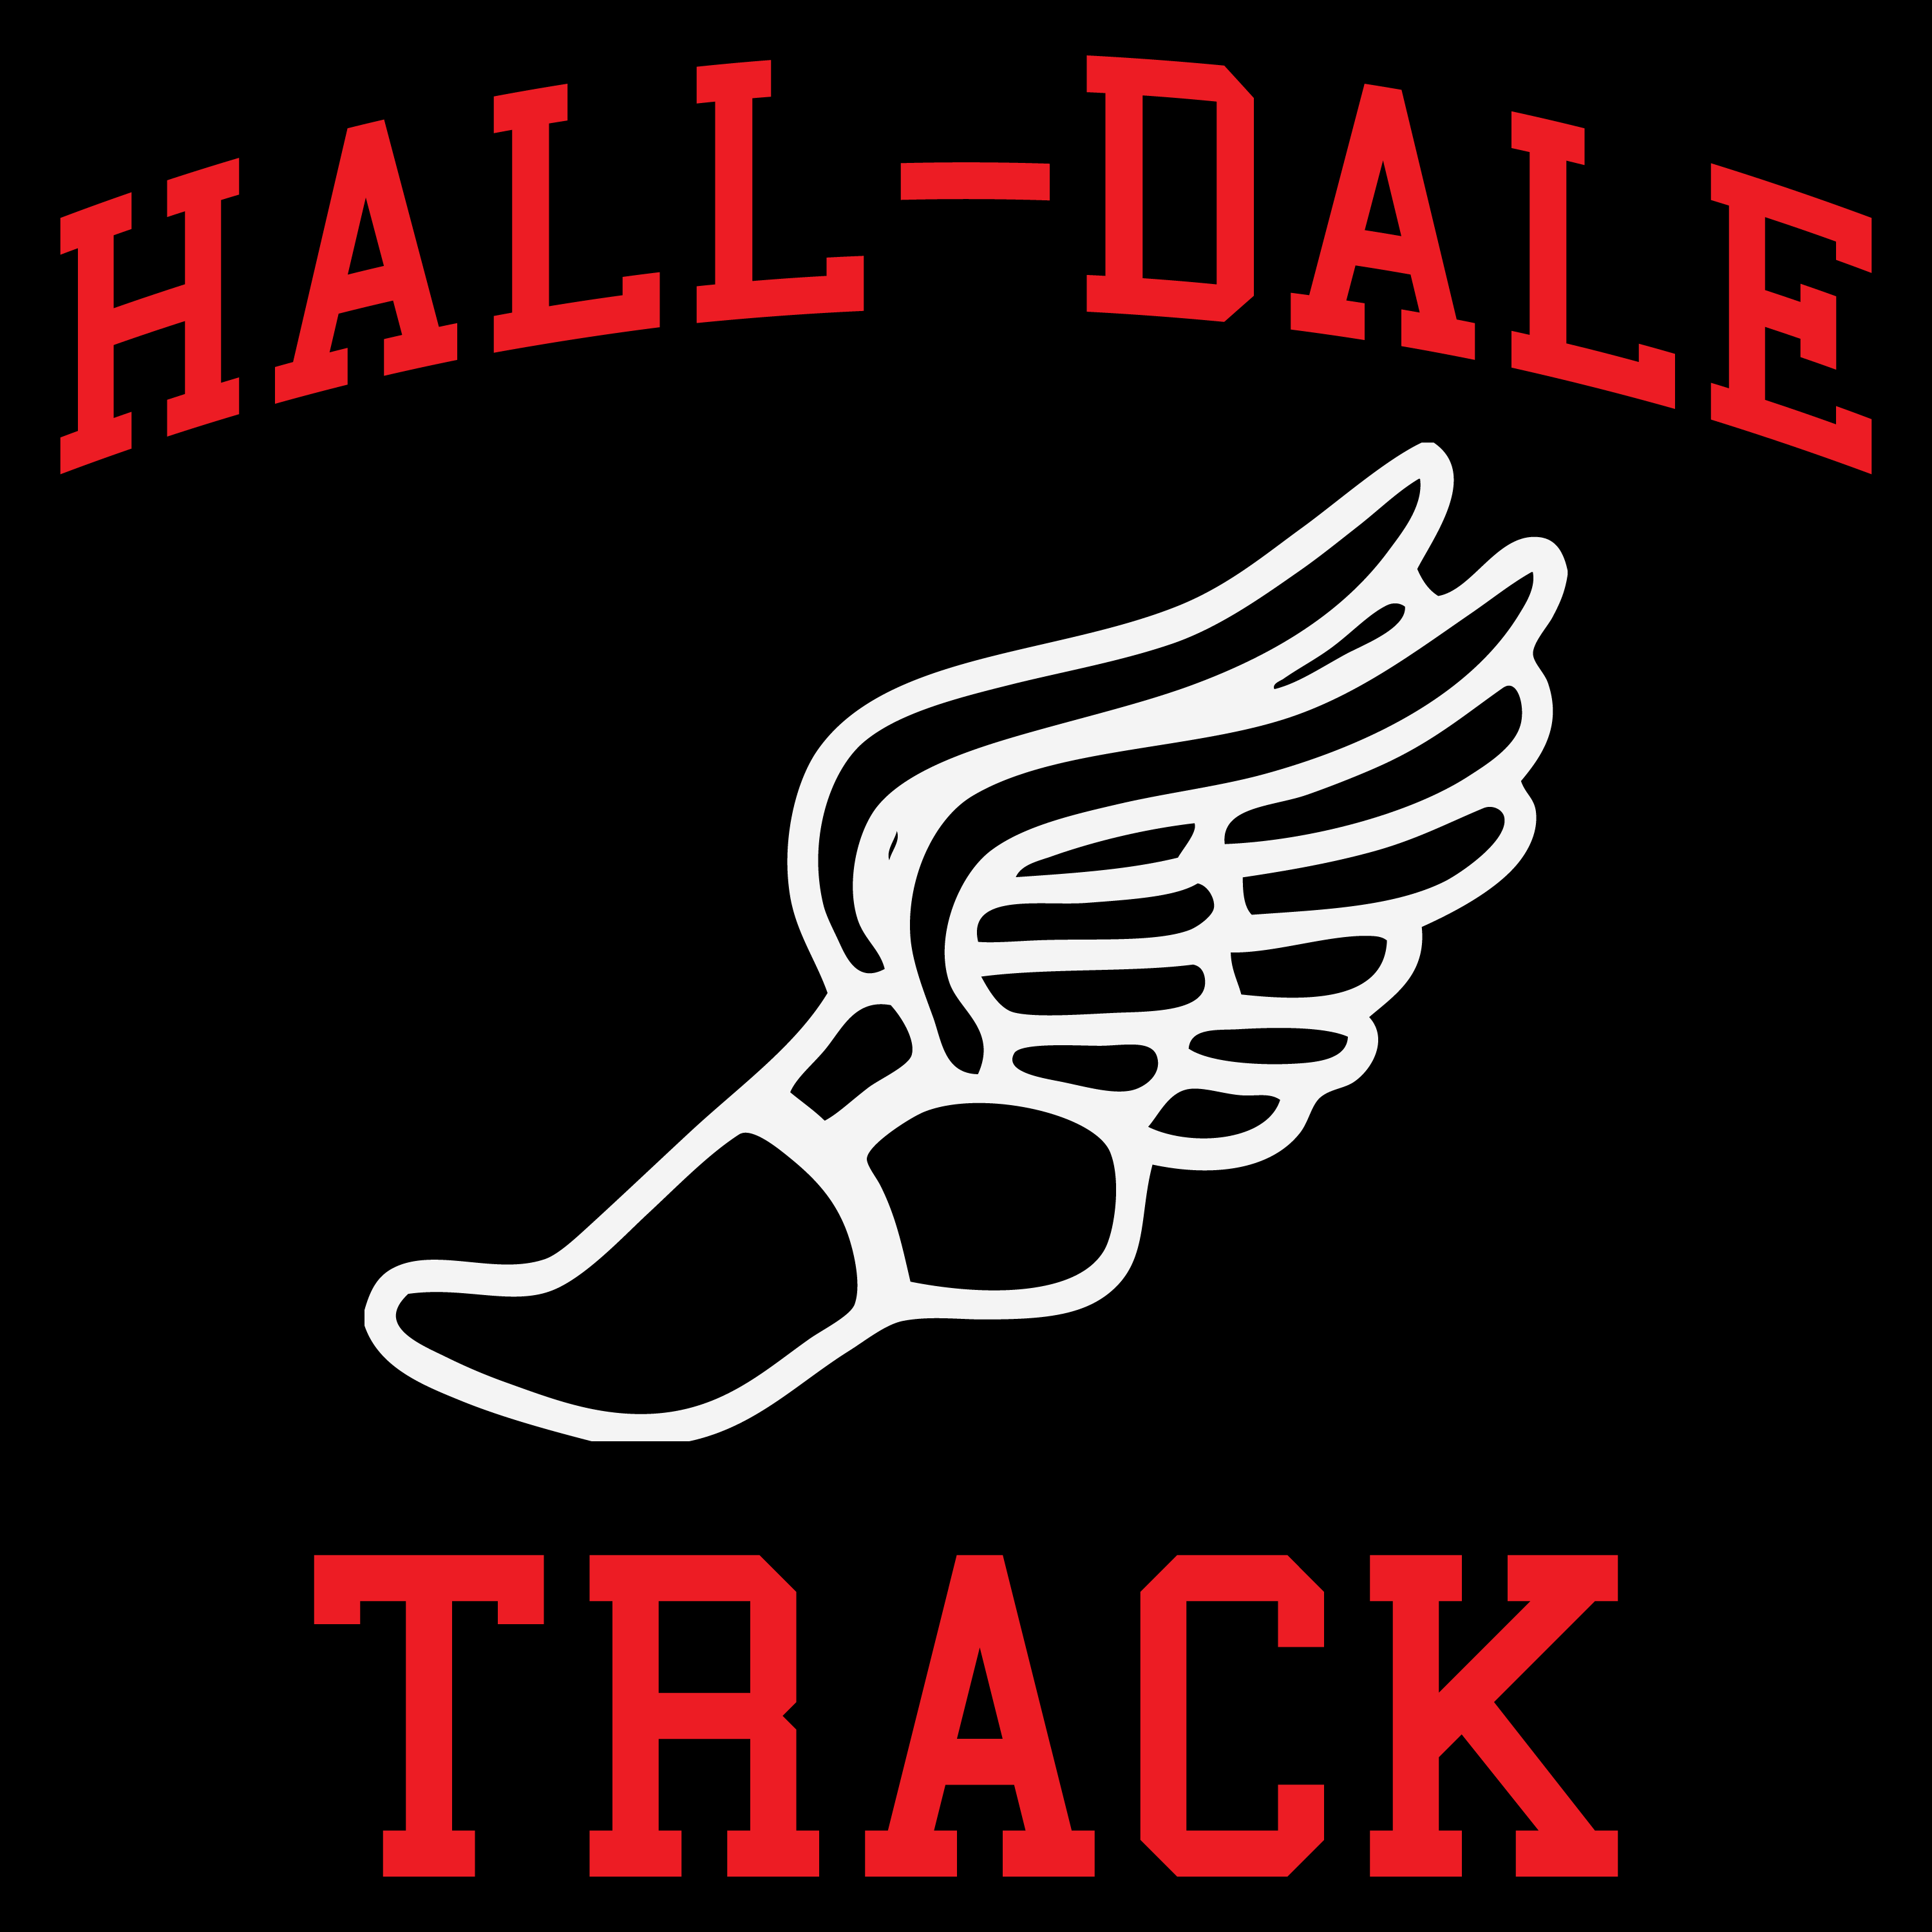 Hall Dale Track